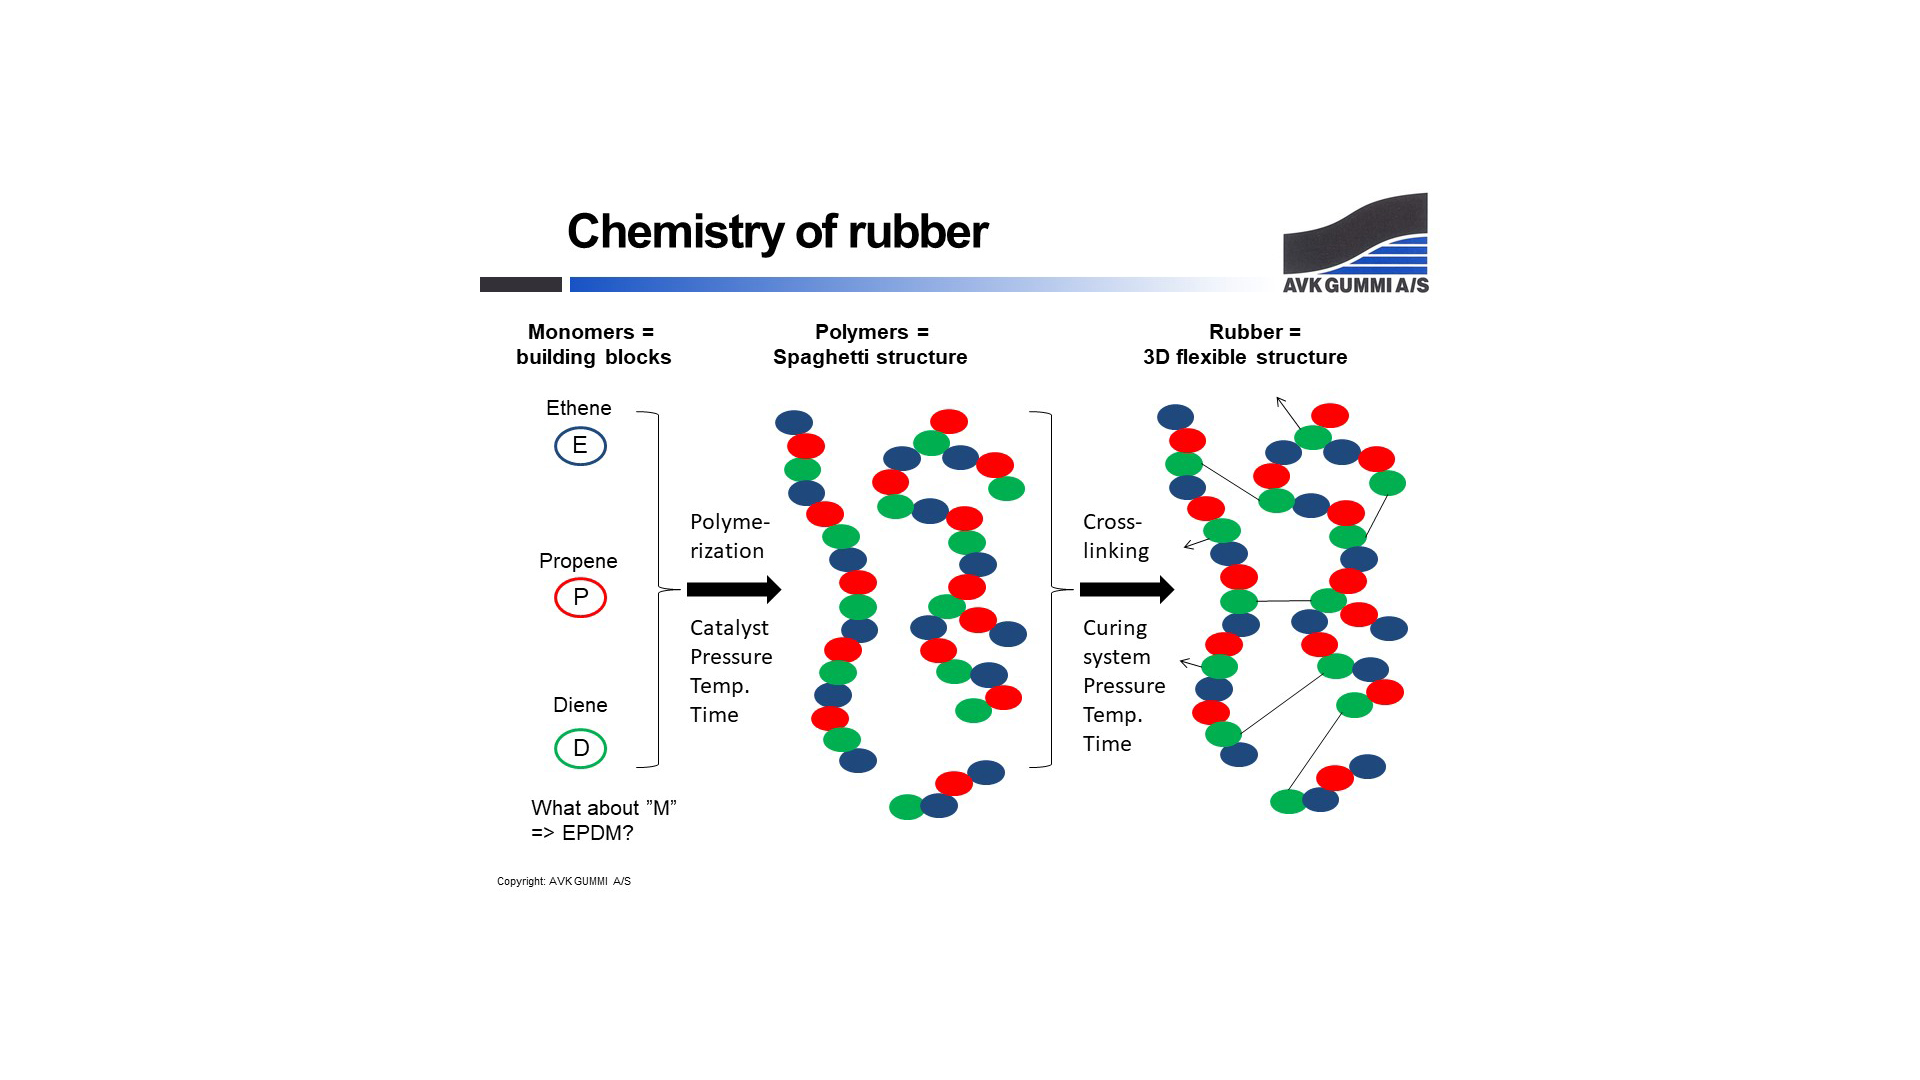 Illustration of chemistry of rubber